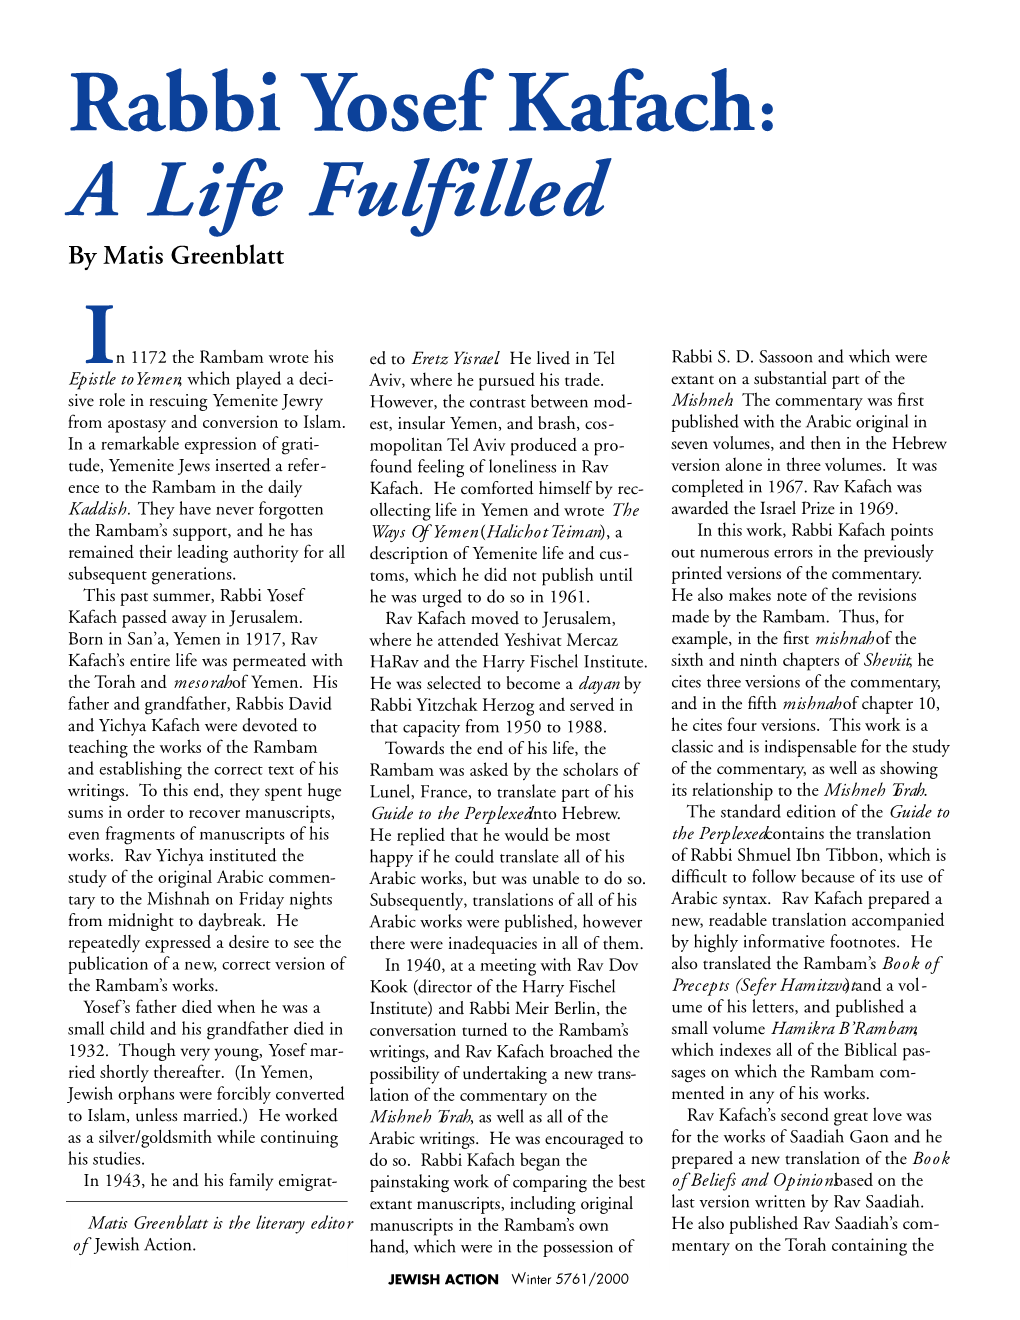 Rabbi Yosef Kafach: a Life Fulfilled by Matis Greenblatt